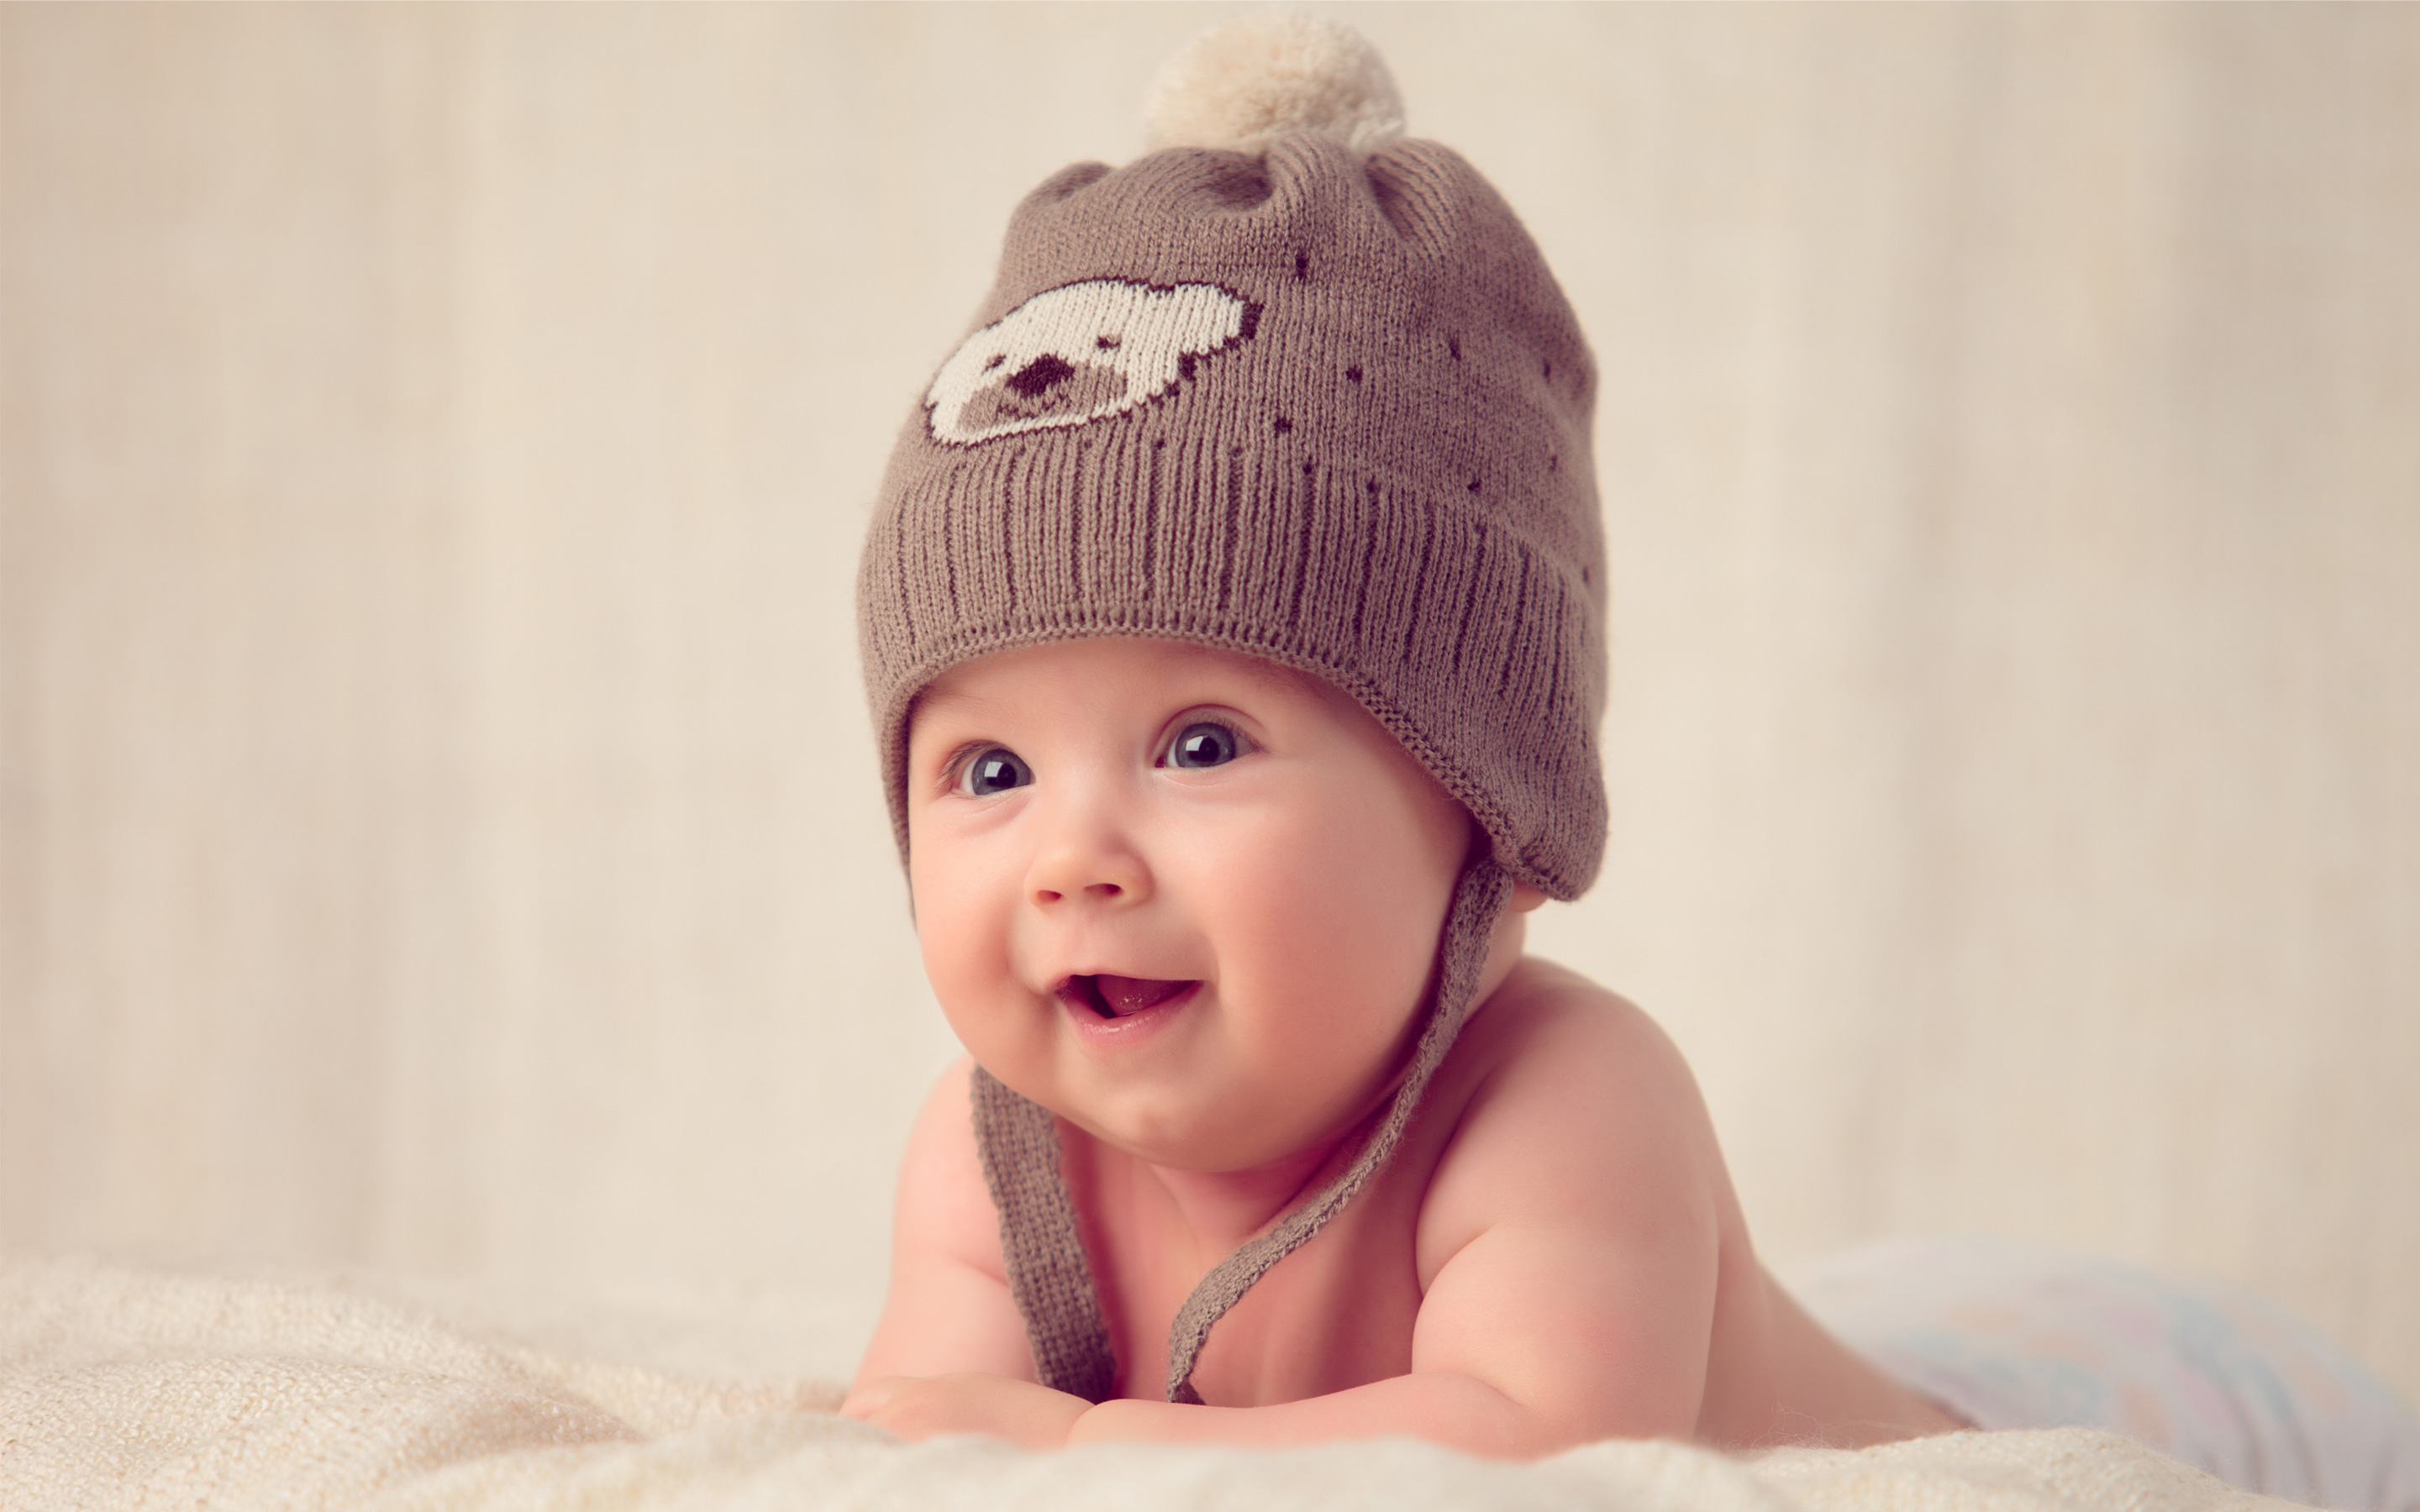 Cute Baby Hat Cap wallpaper.